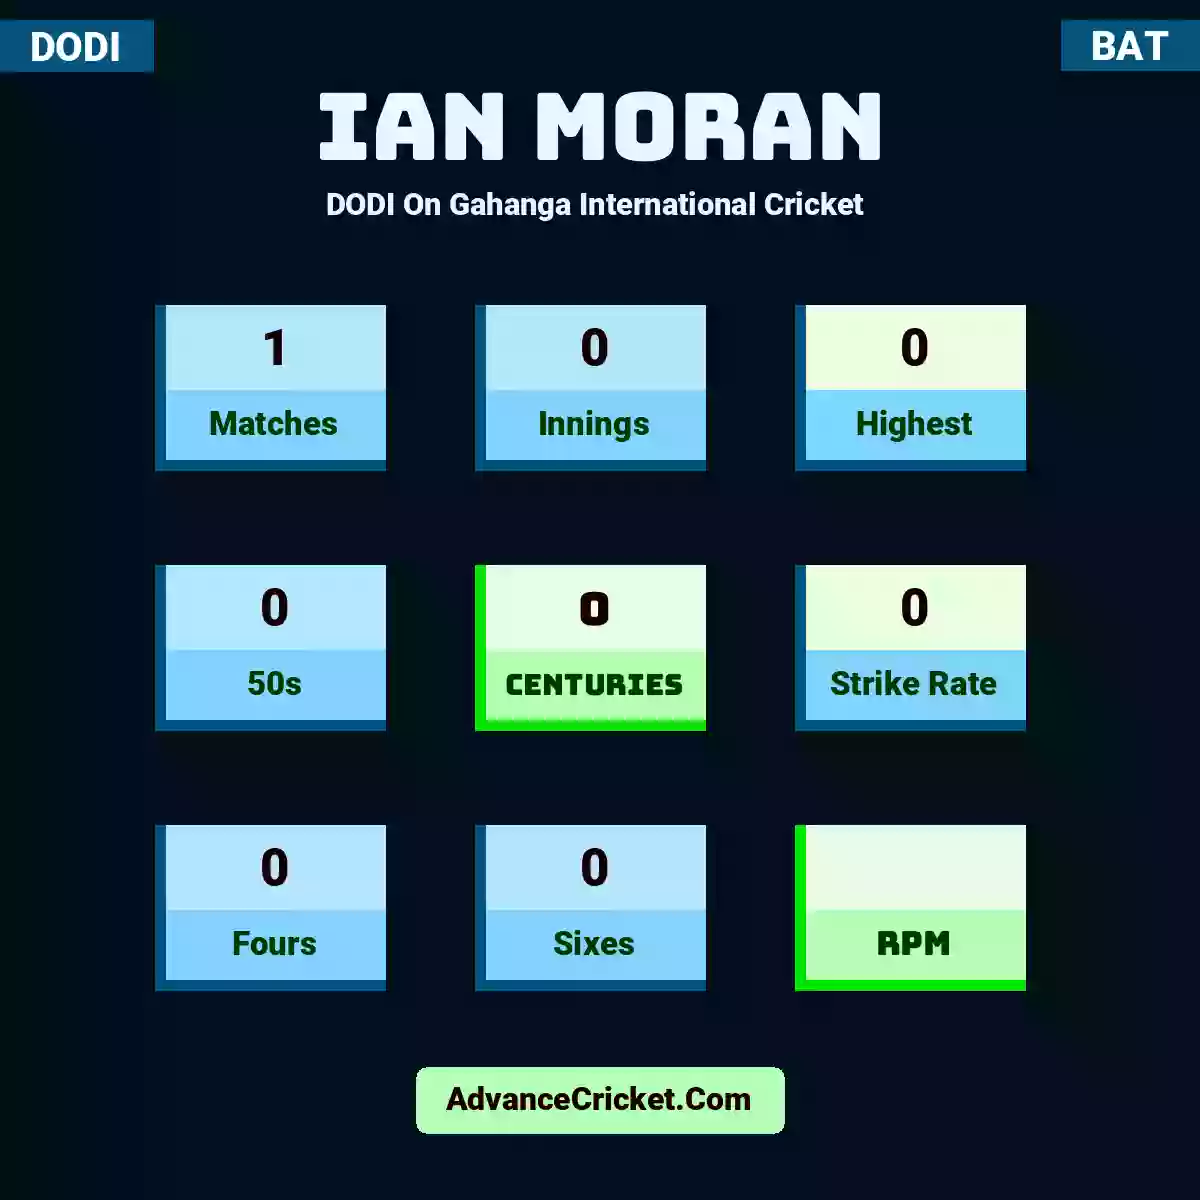 Ian Moran DODI  On Gahanga International Cricket , Ian Moran played 1 matches, scored 0 runs as highest, 0 half-centuries, and 0 centuries, with a strike rate of 0. I.Moran hit 0 fours and 0 sixes.